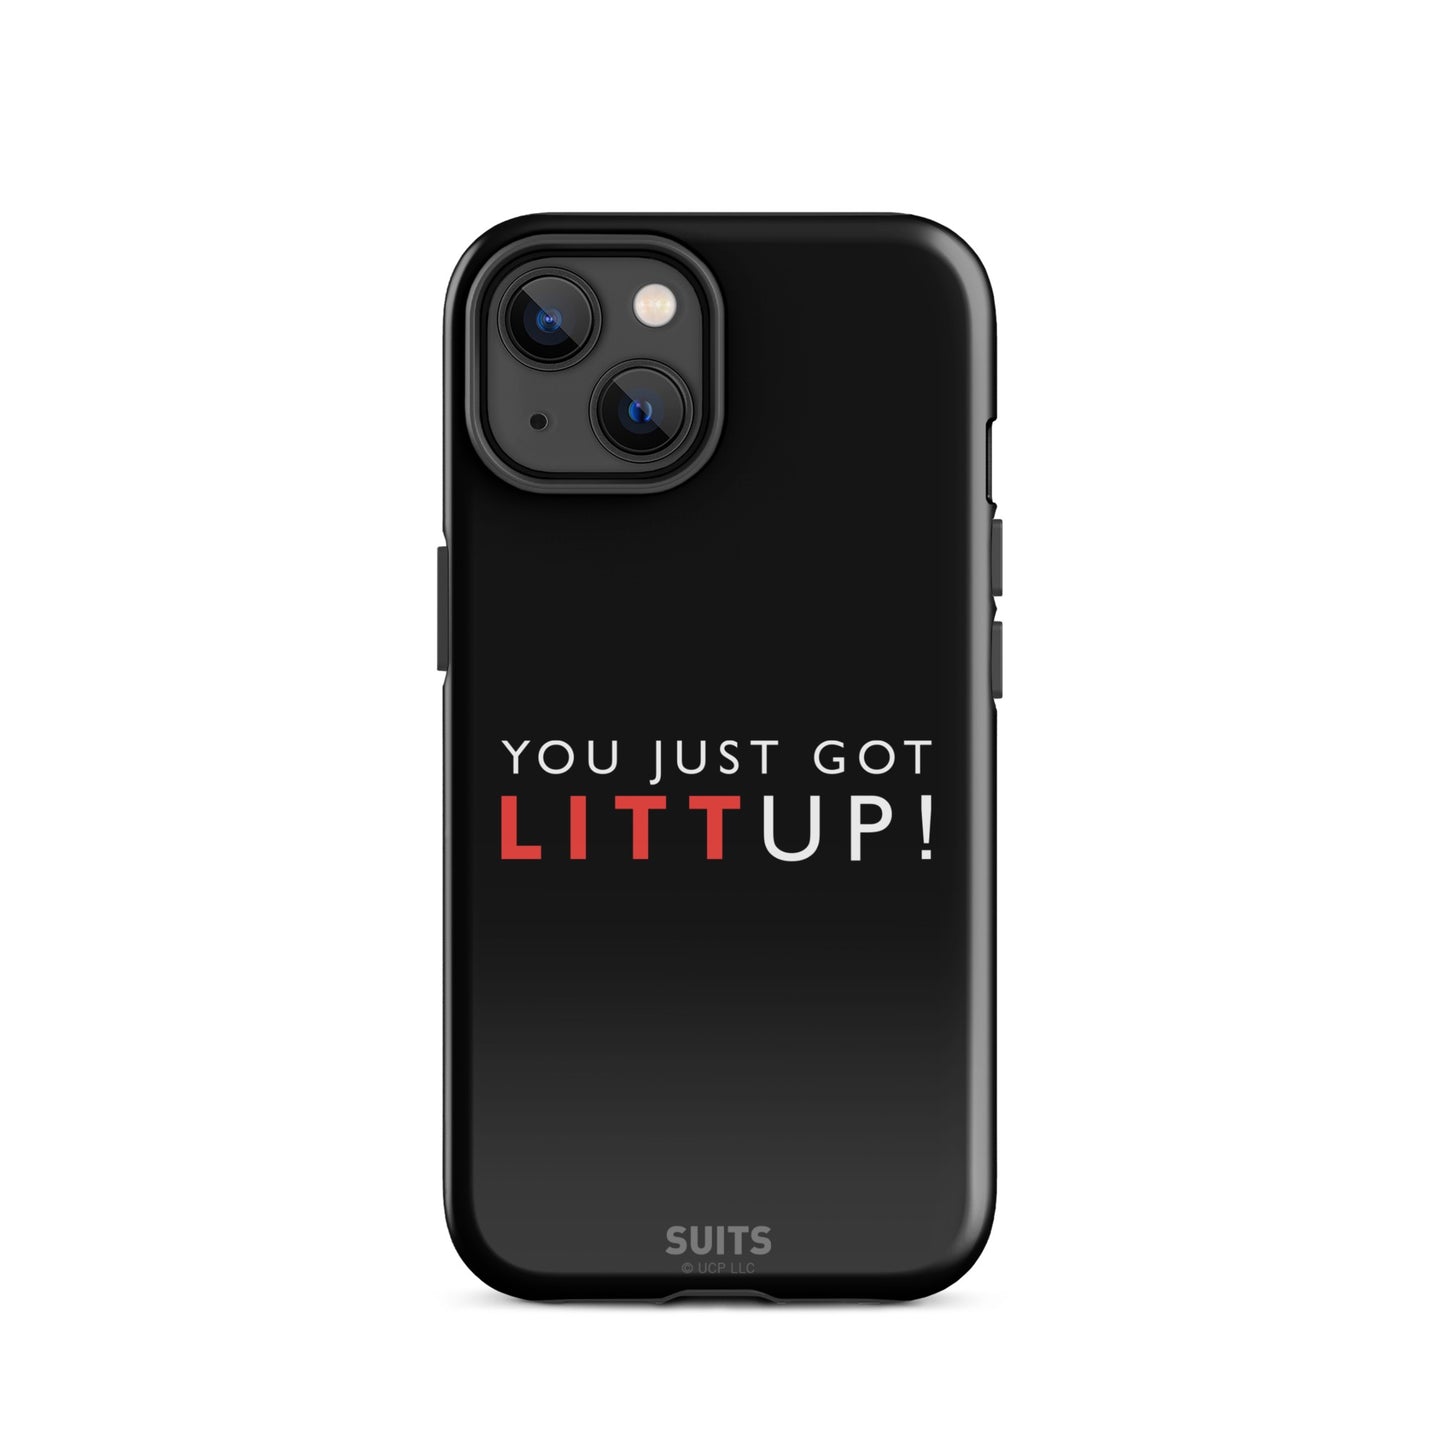 Suits Litt Up Tough Phone Case - iPhone